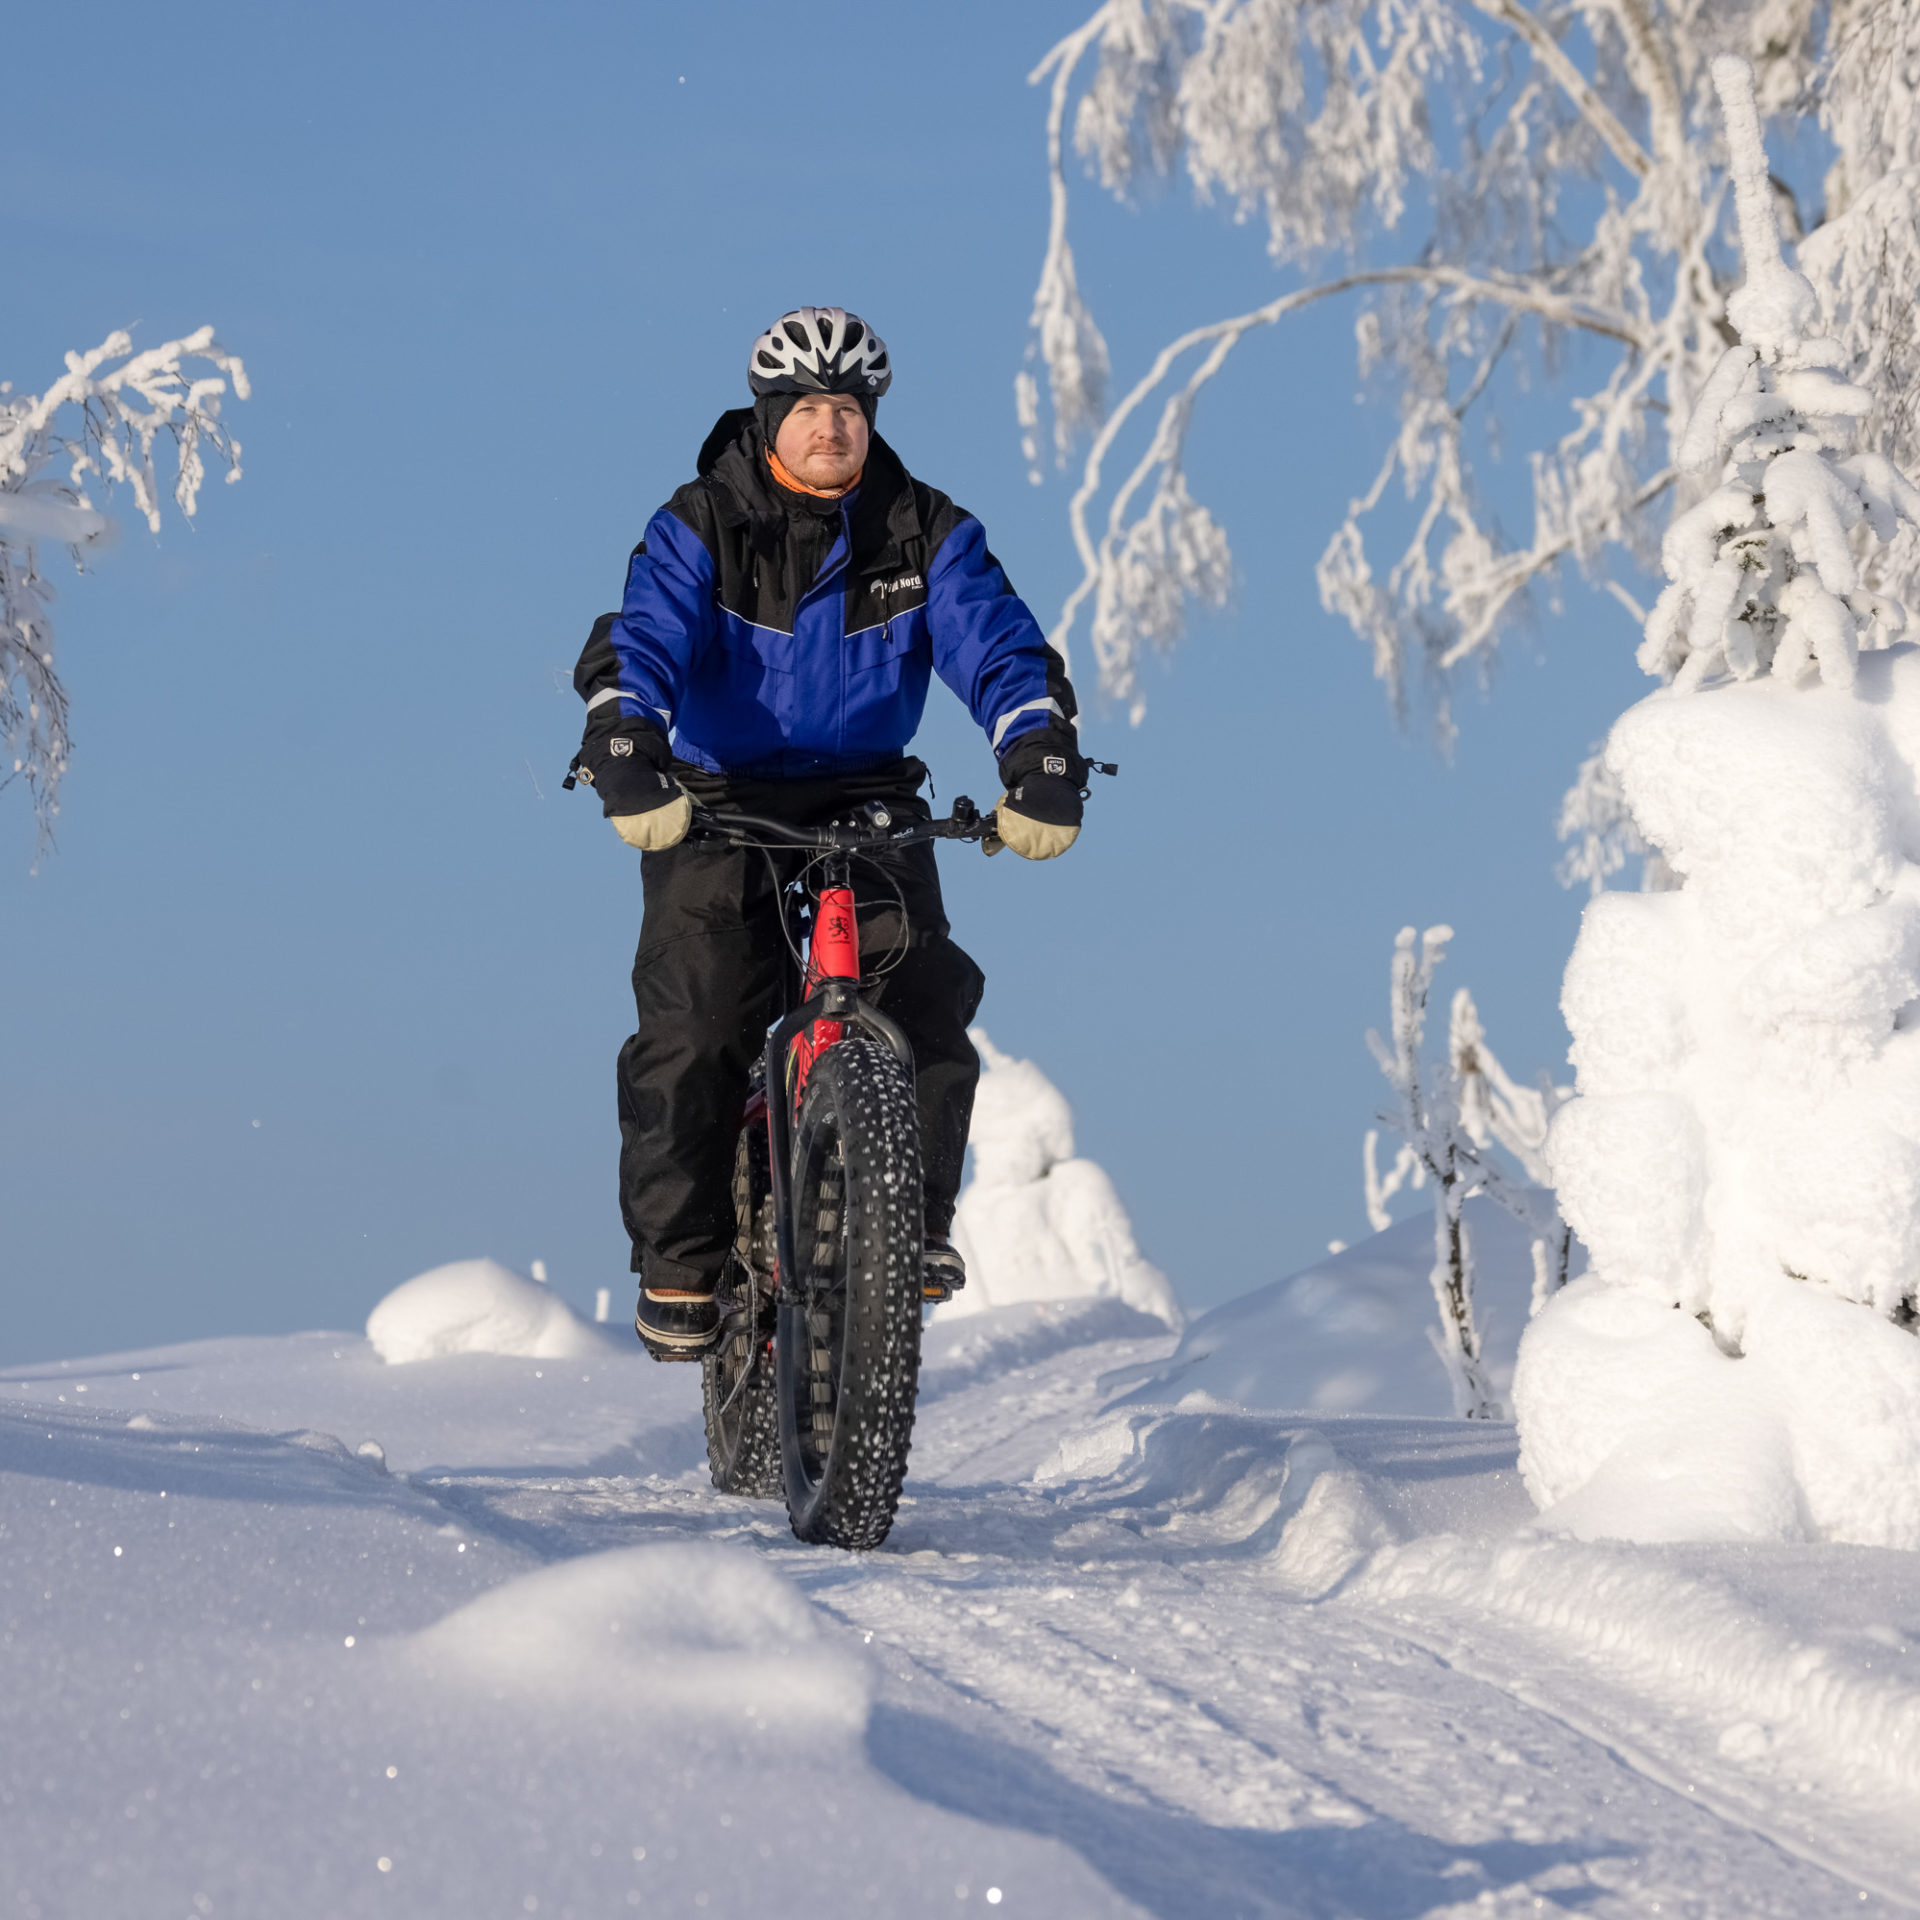 Rental / e-fatbike. Villi Pohjola Tahko / Wild Nordic Finland Tahko @wildnordic Finland